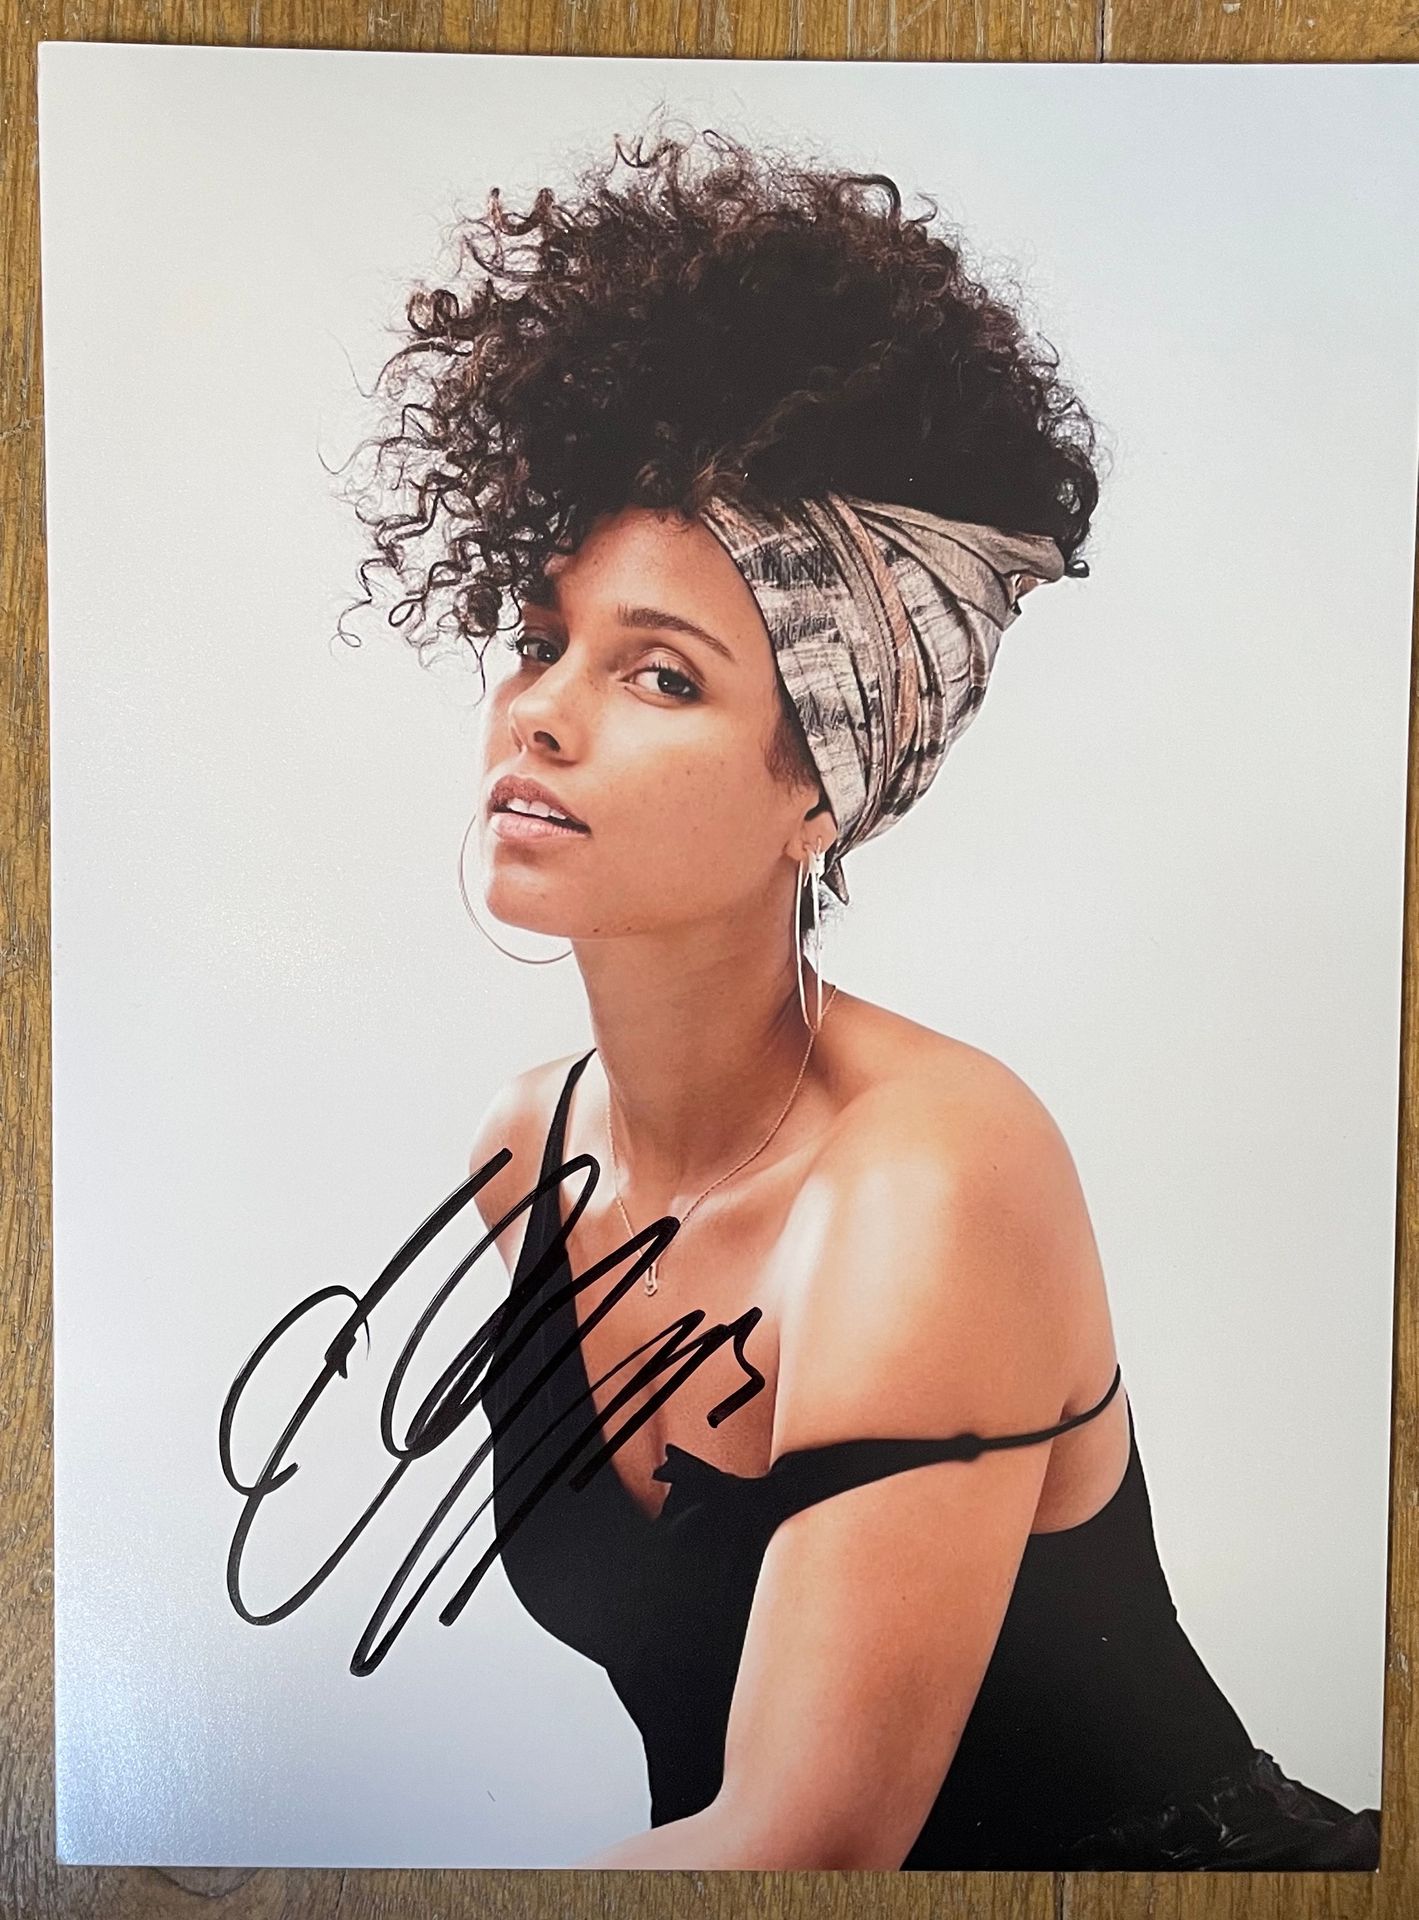 R&B/Funk… Una foto - Alicia Keys
Firmada por la artista
EX